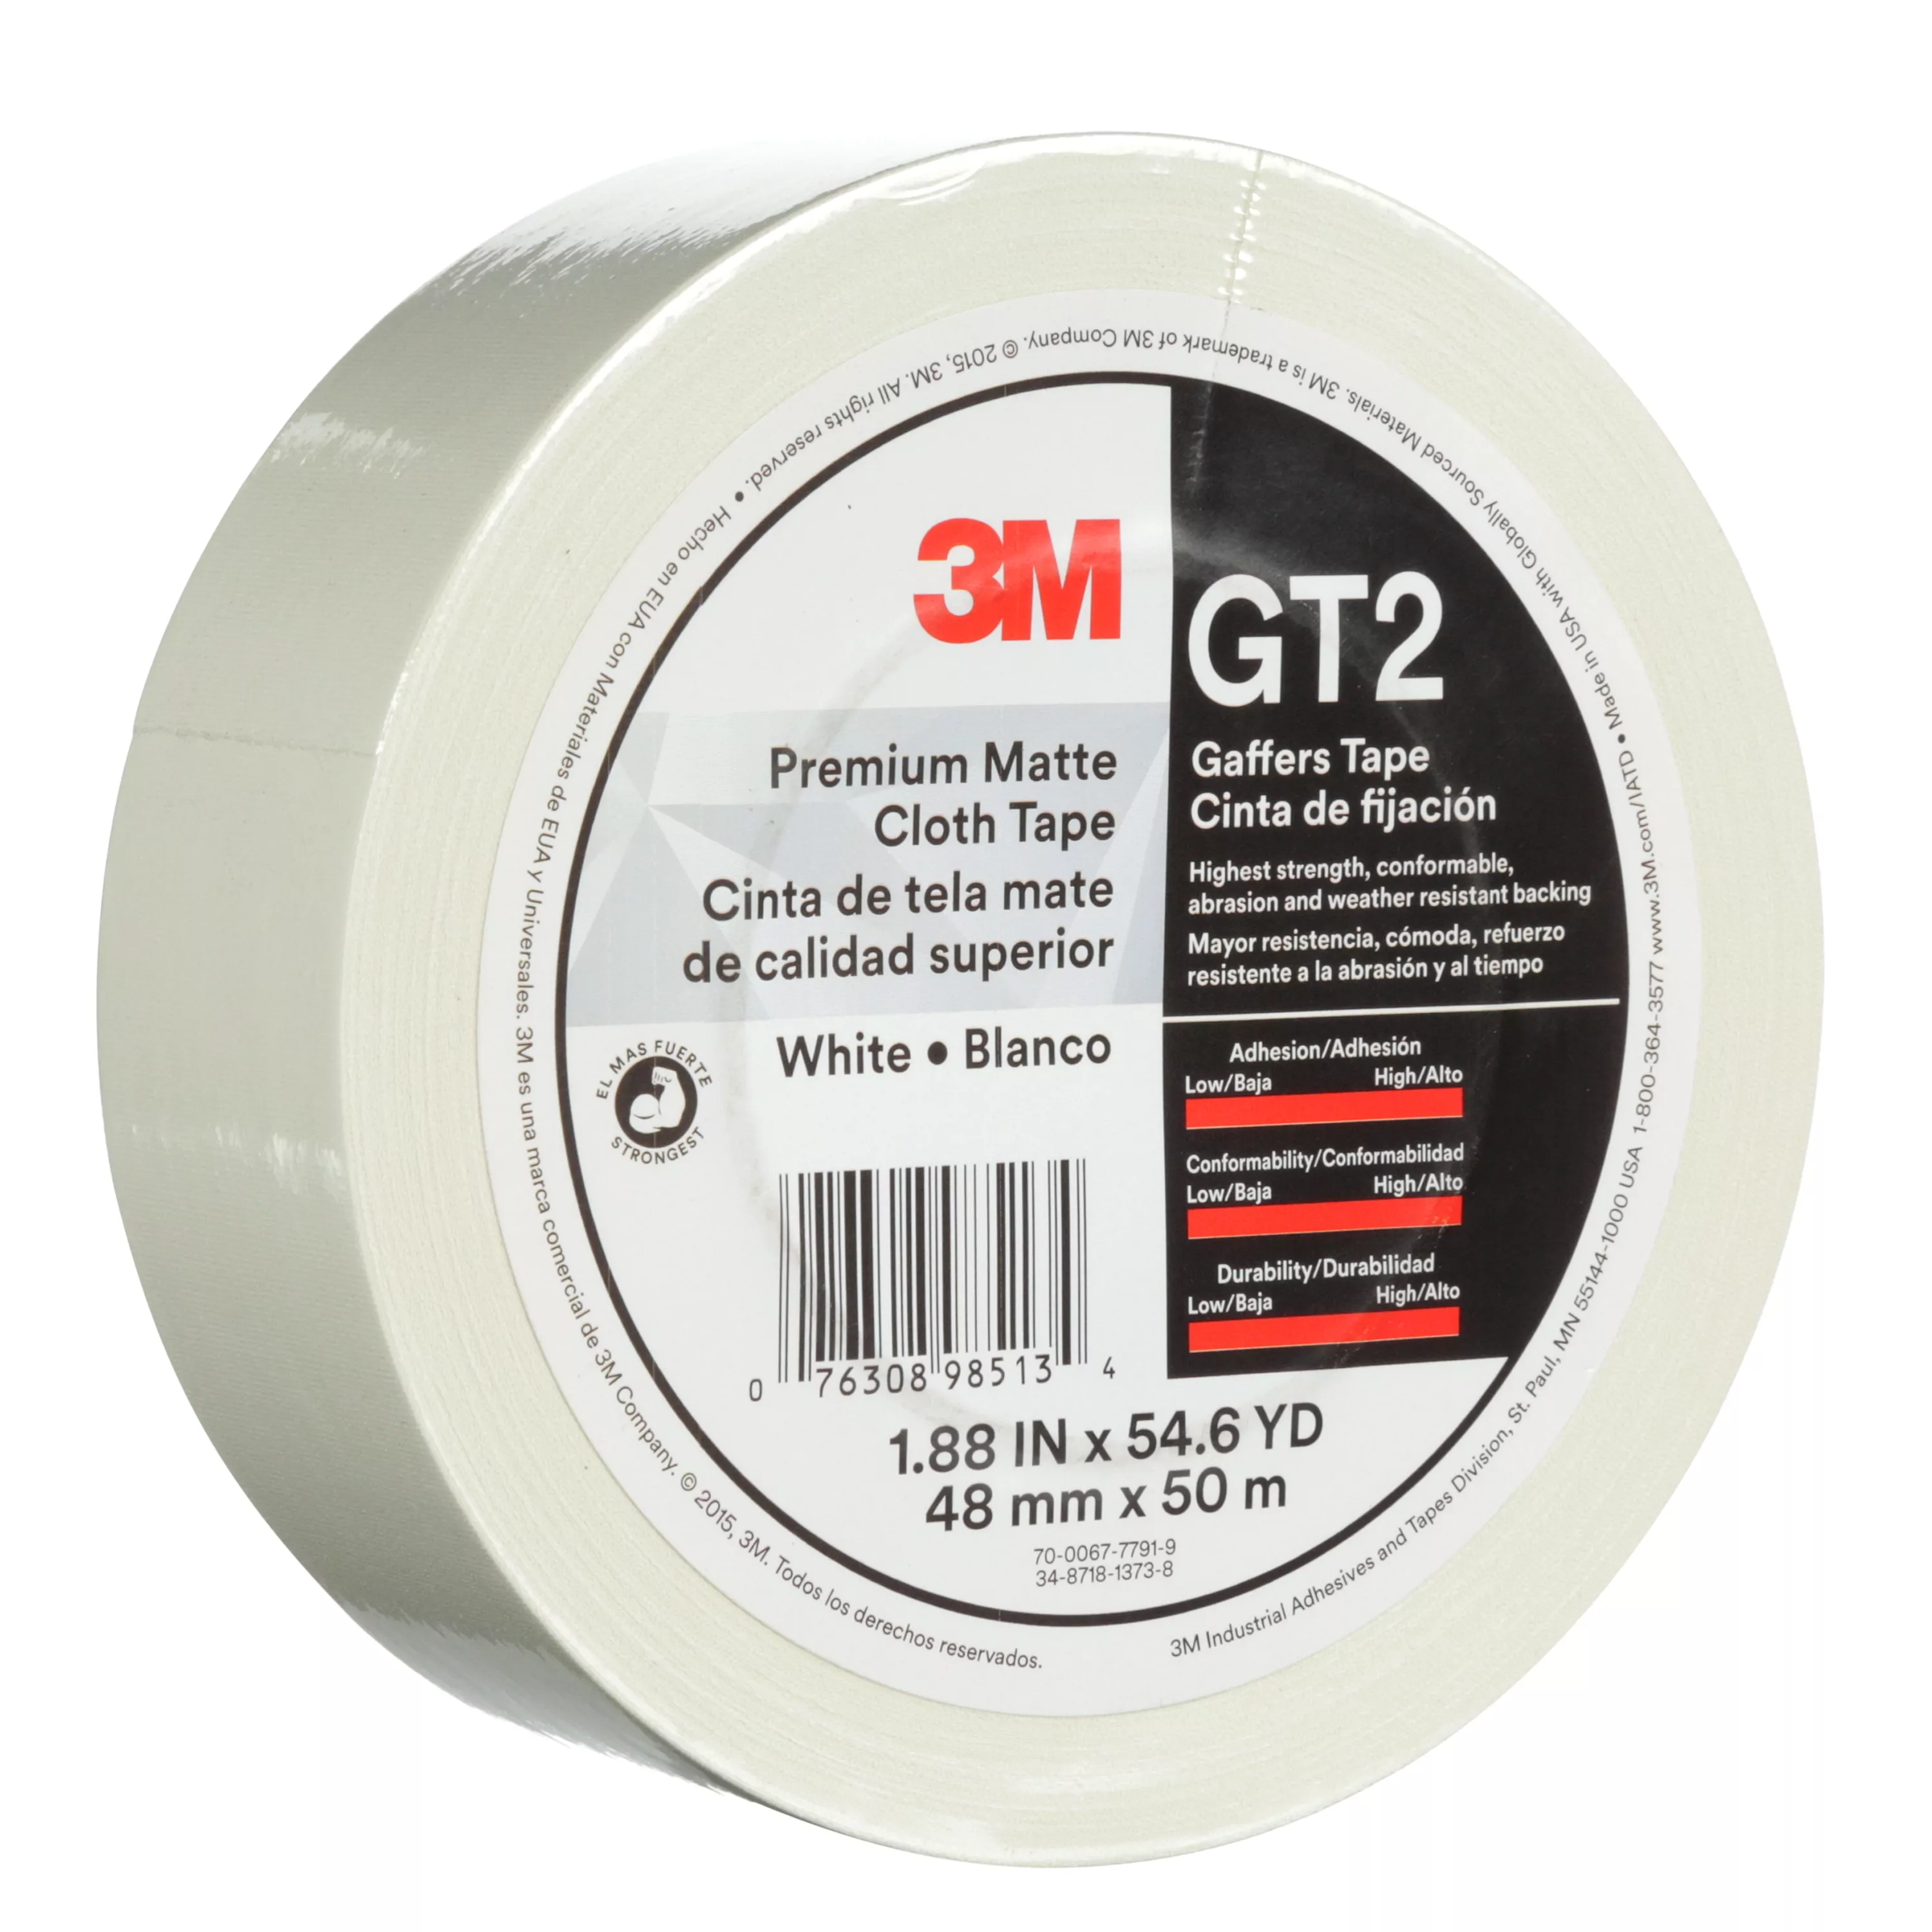 3M™ Premium Matte Cloth (Gaffers) Tape GT2, White, 48 mm x 50 m 11 mil,
24/Case